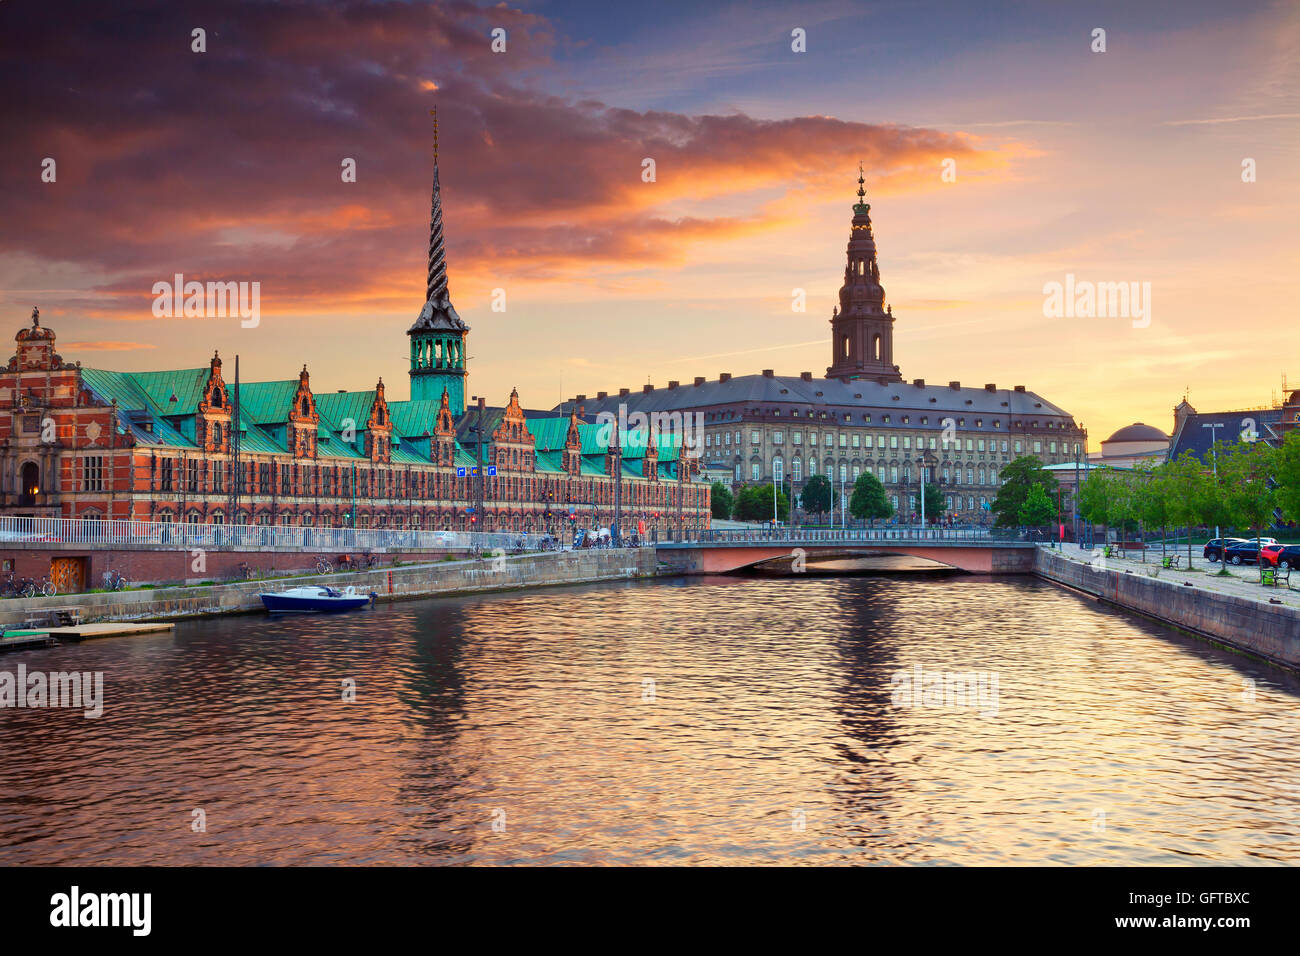 Copenhague. Imagen de Copenhague, Dinamarca durante el hermoso atardecer. Foto de stock